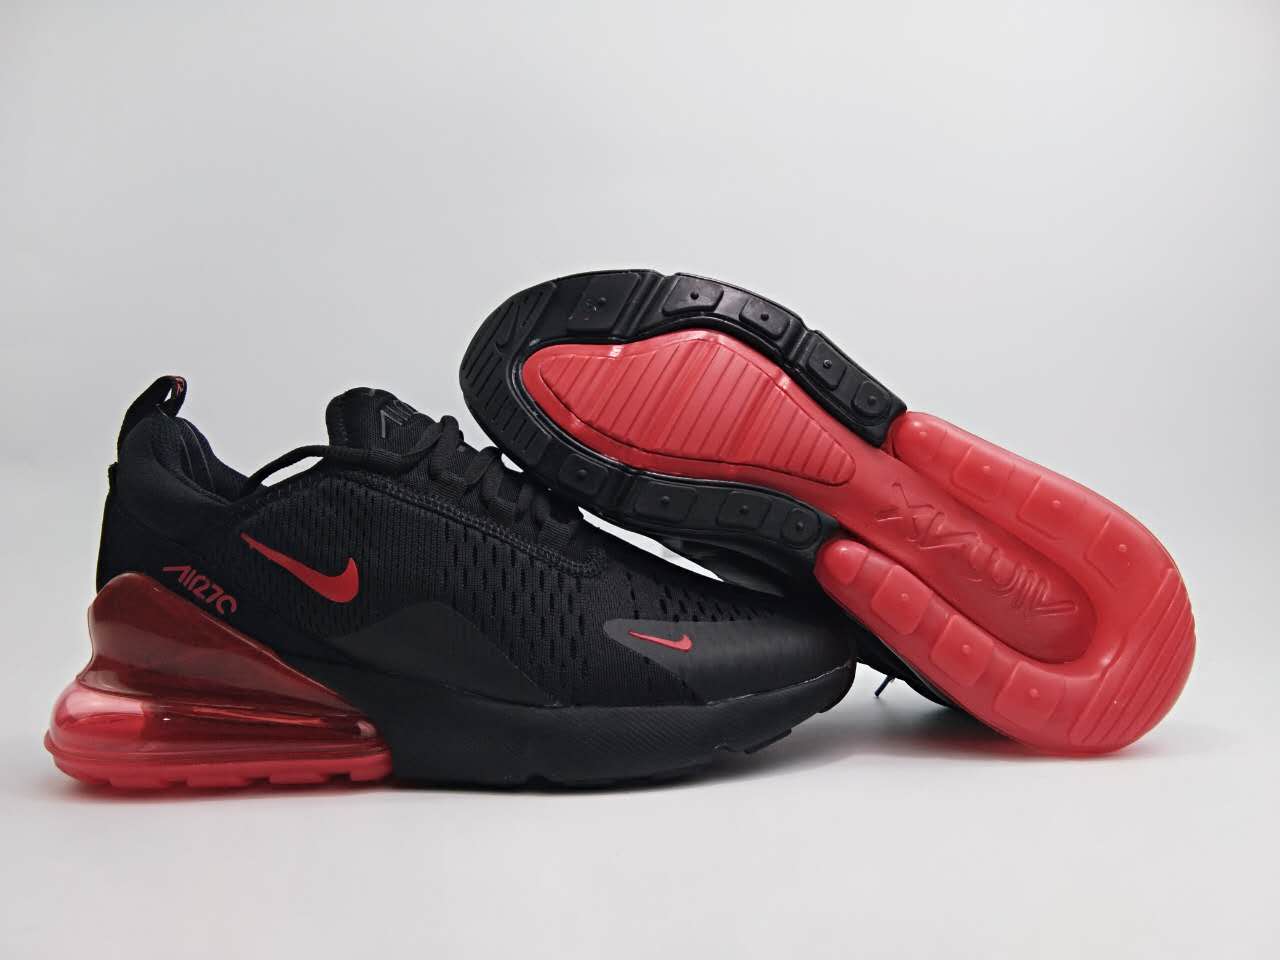 New Nike Air Max Flair 270 Nano Black Red Shoes